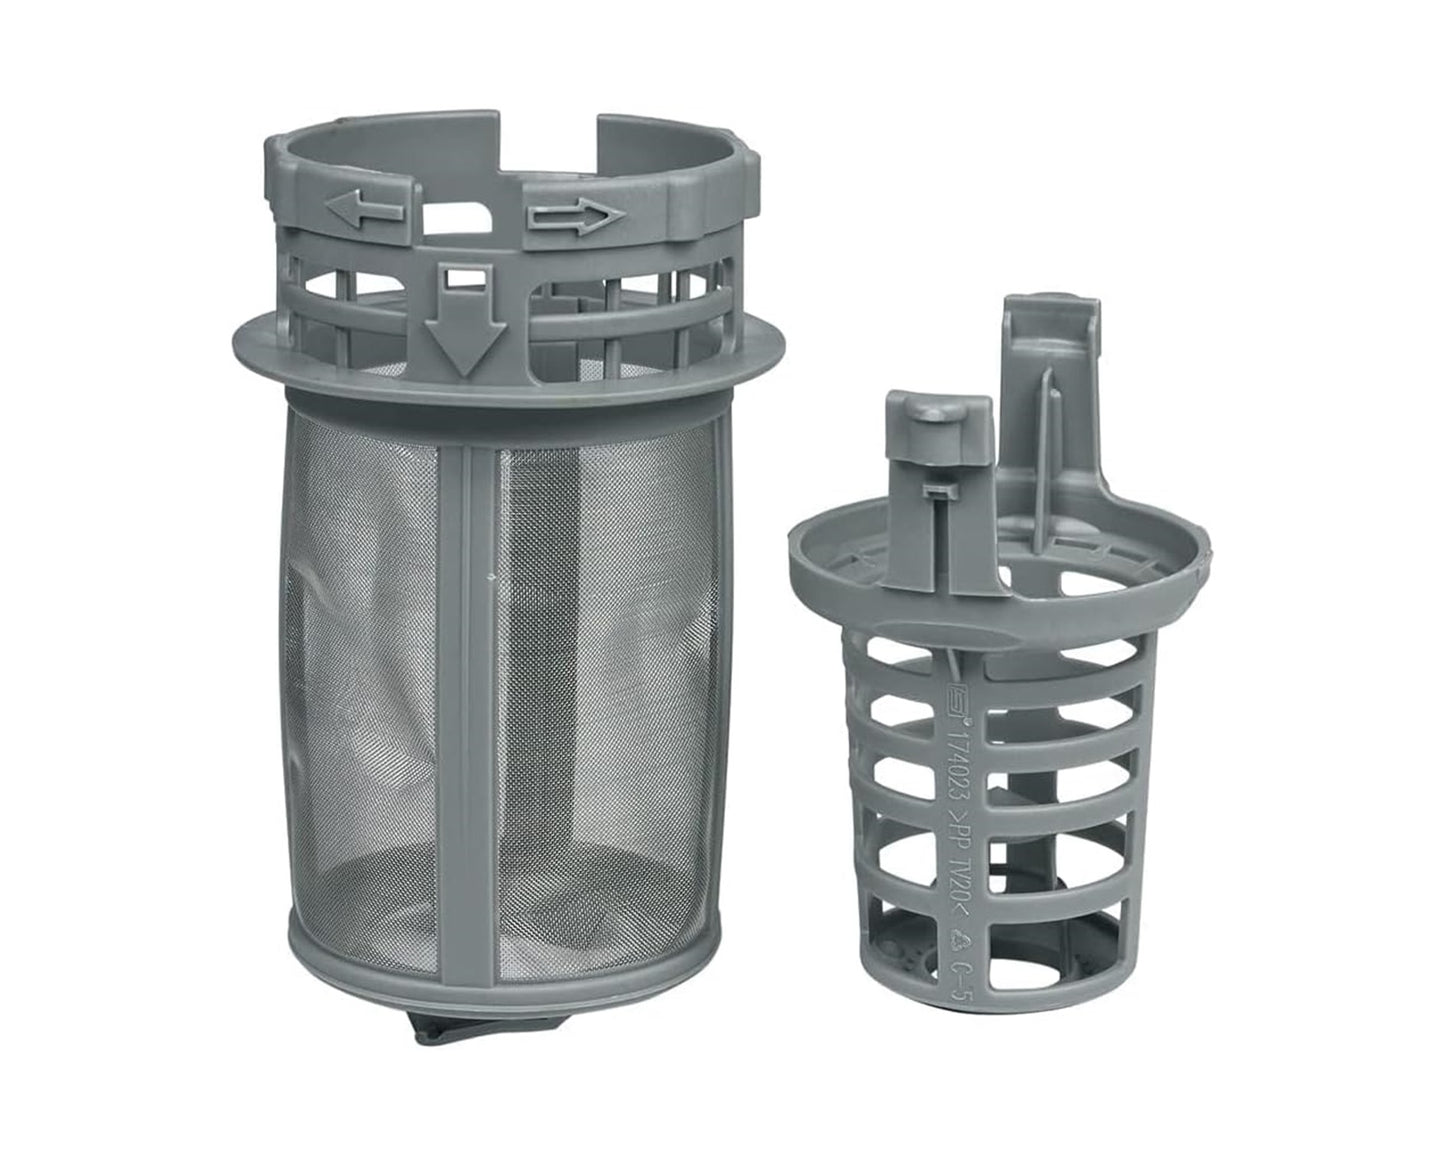 Genuine Dishwasher Bottom Drain Mesh Filter Assembley for Ikea DWHC00W20109768, DWHC10W80109770, DWHC40W60109771